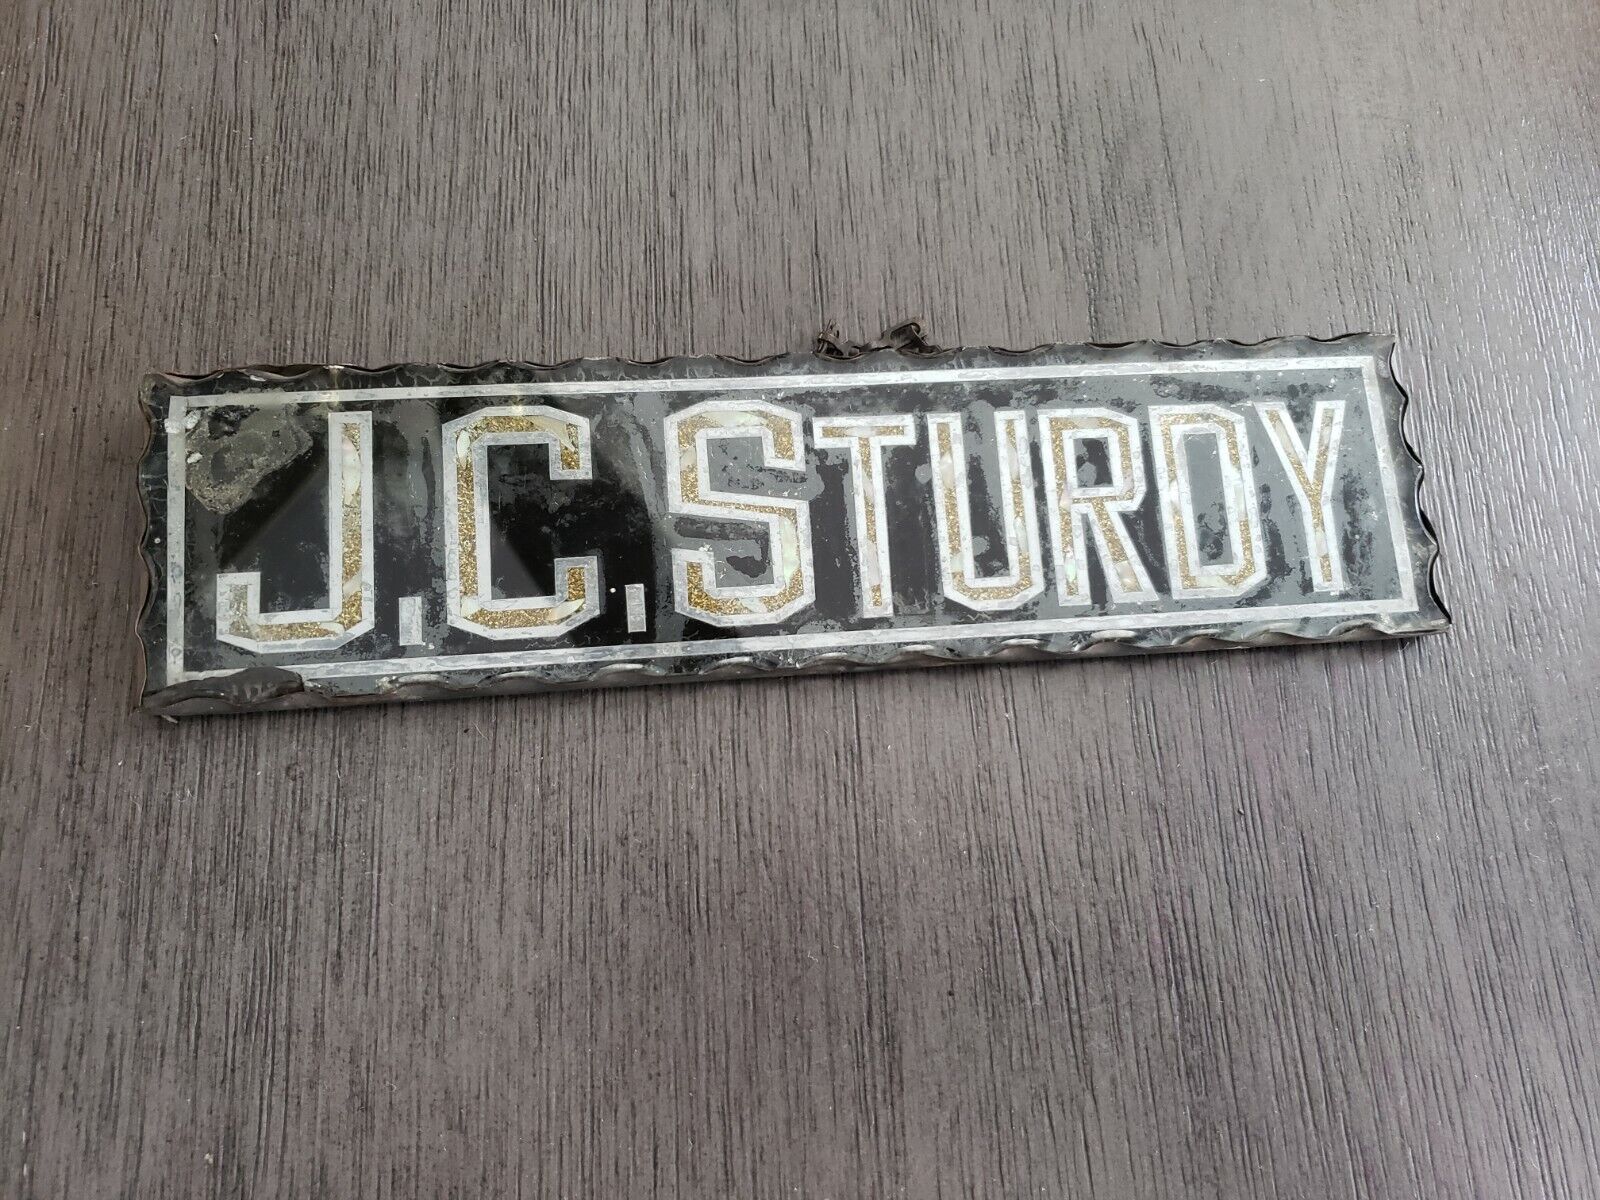 Vintage Reverse Glass Name Plate. Jc Sturdy